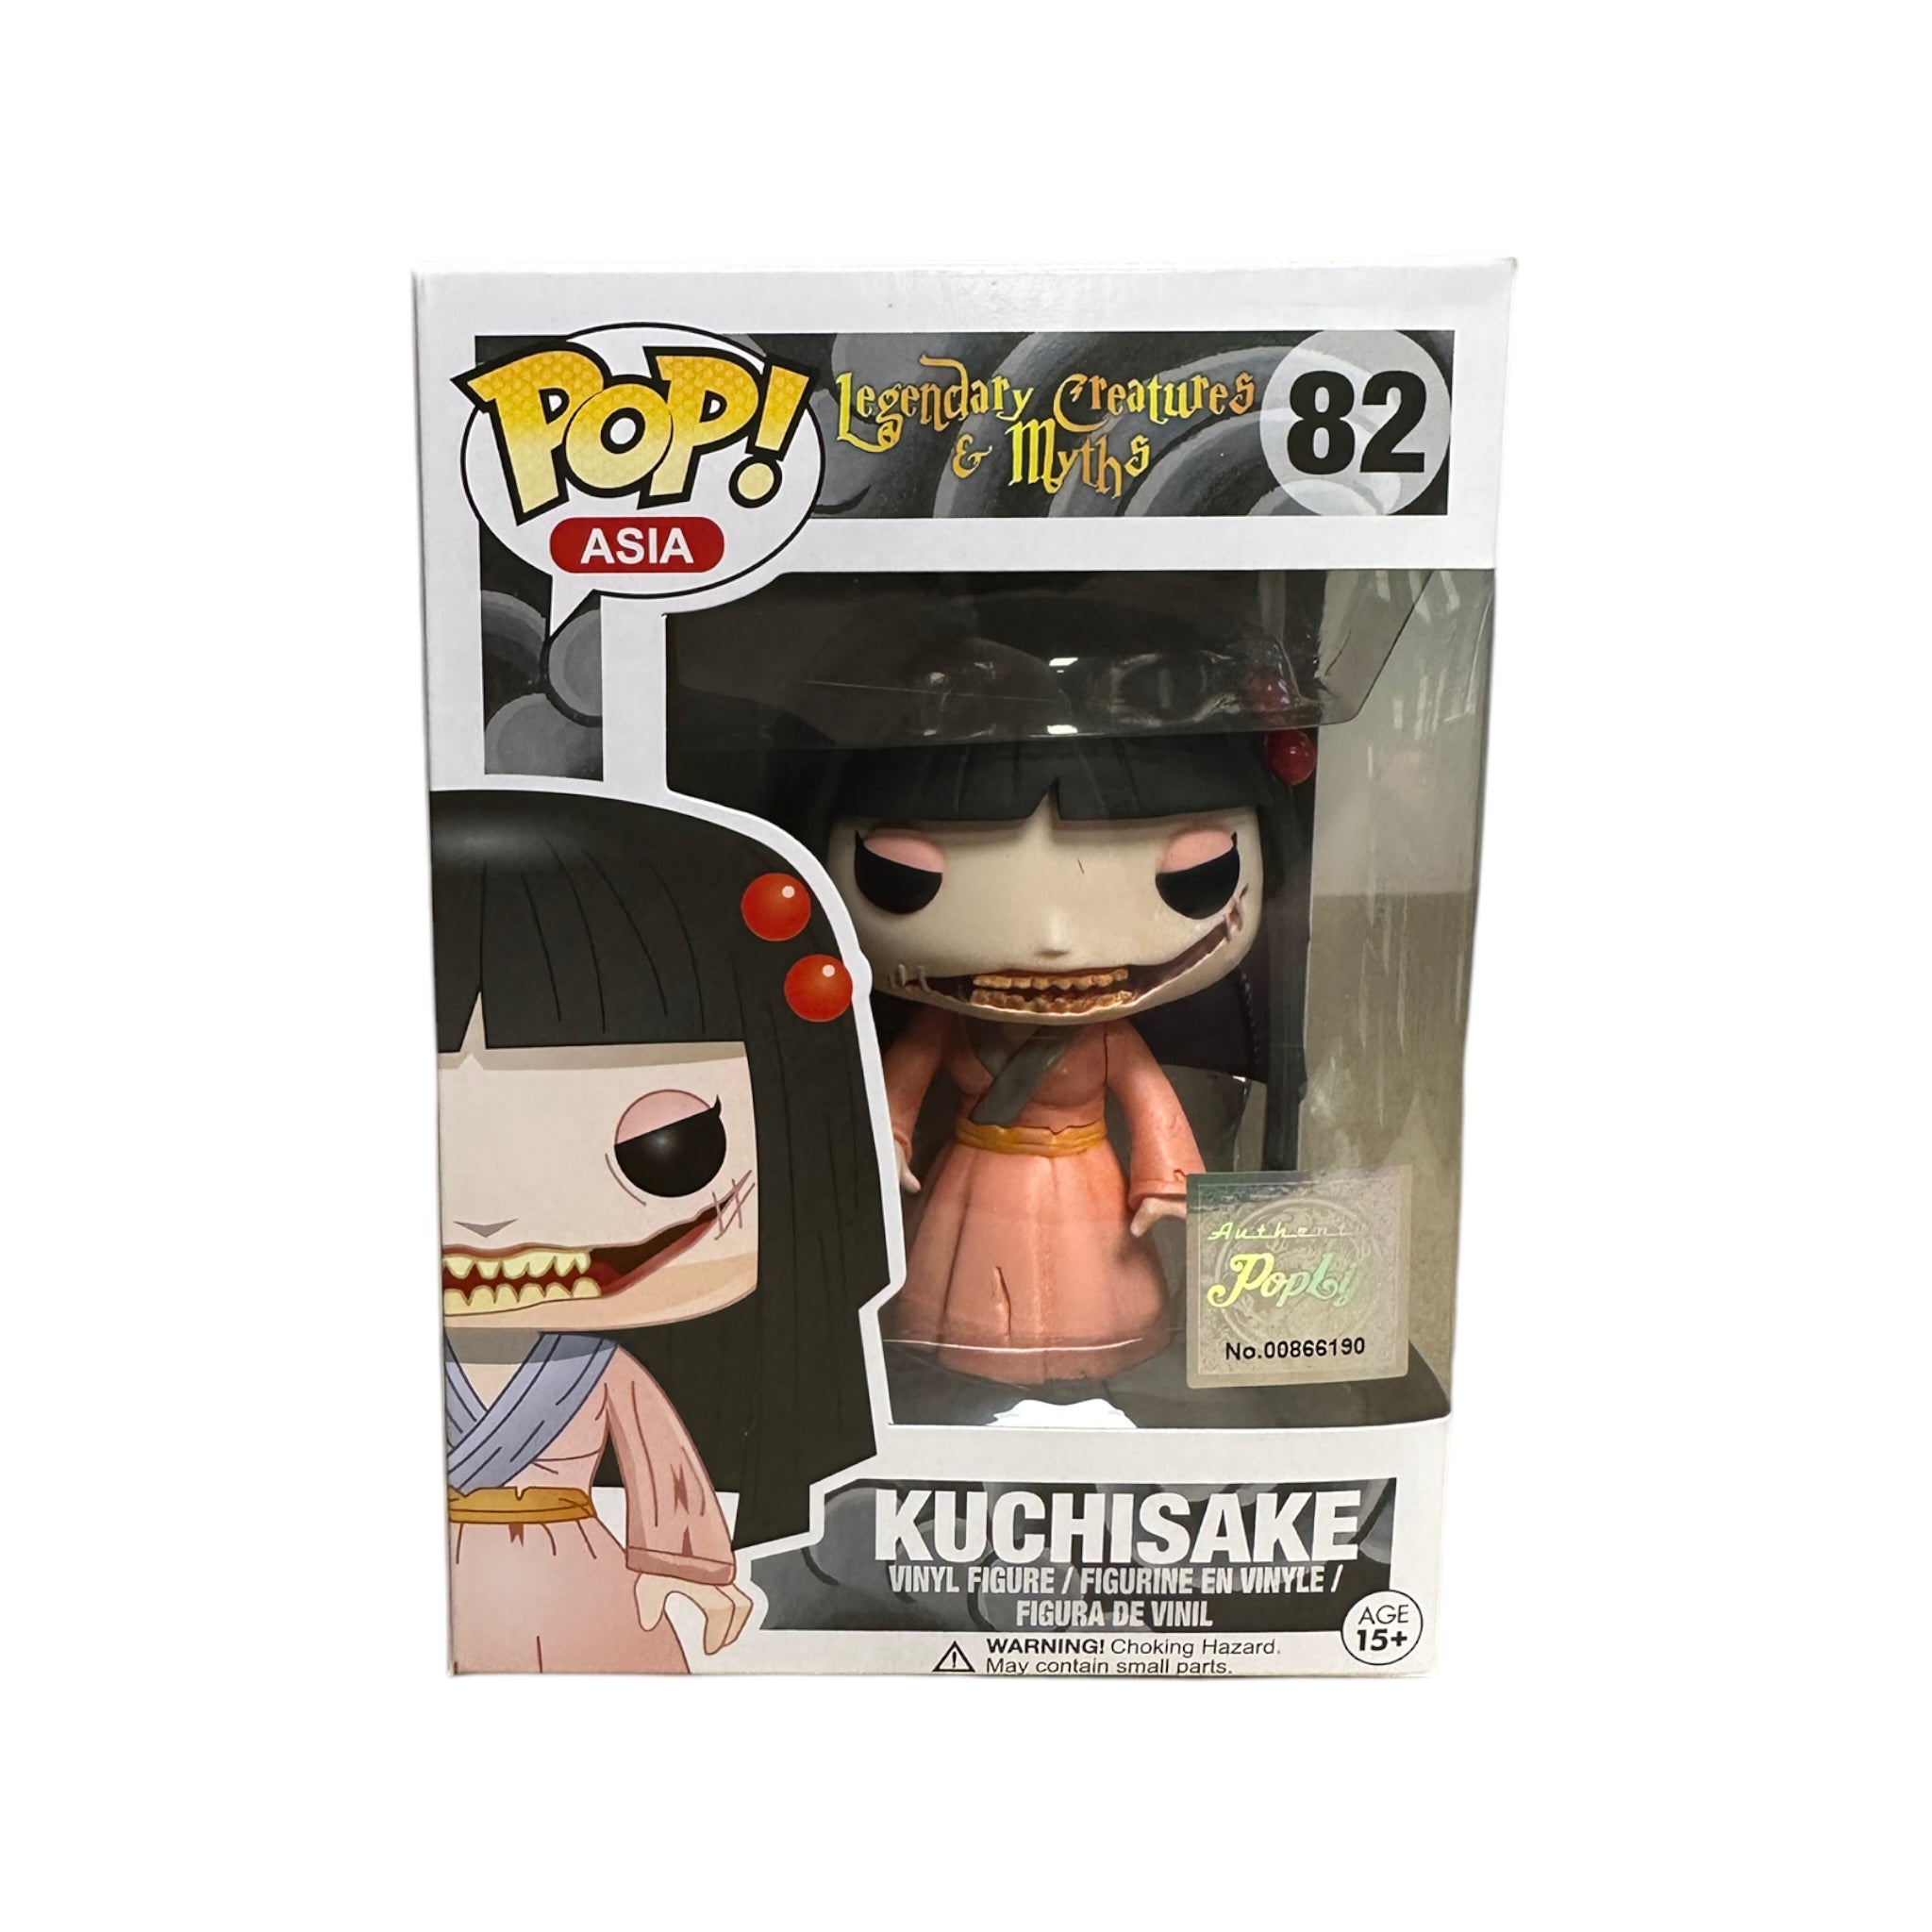 Kuchisake #82 Funko Pop! - Legendary Creatures & Myths - PopLife Exclusive - Condition 8/10